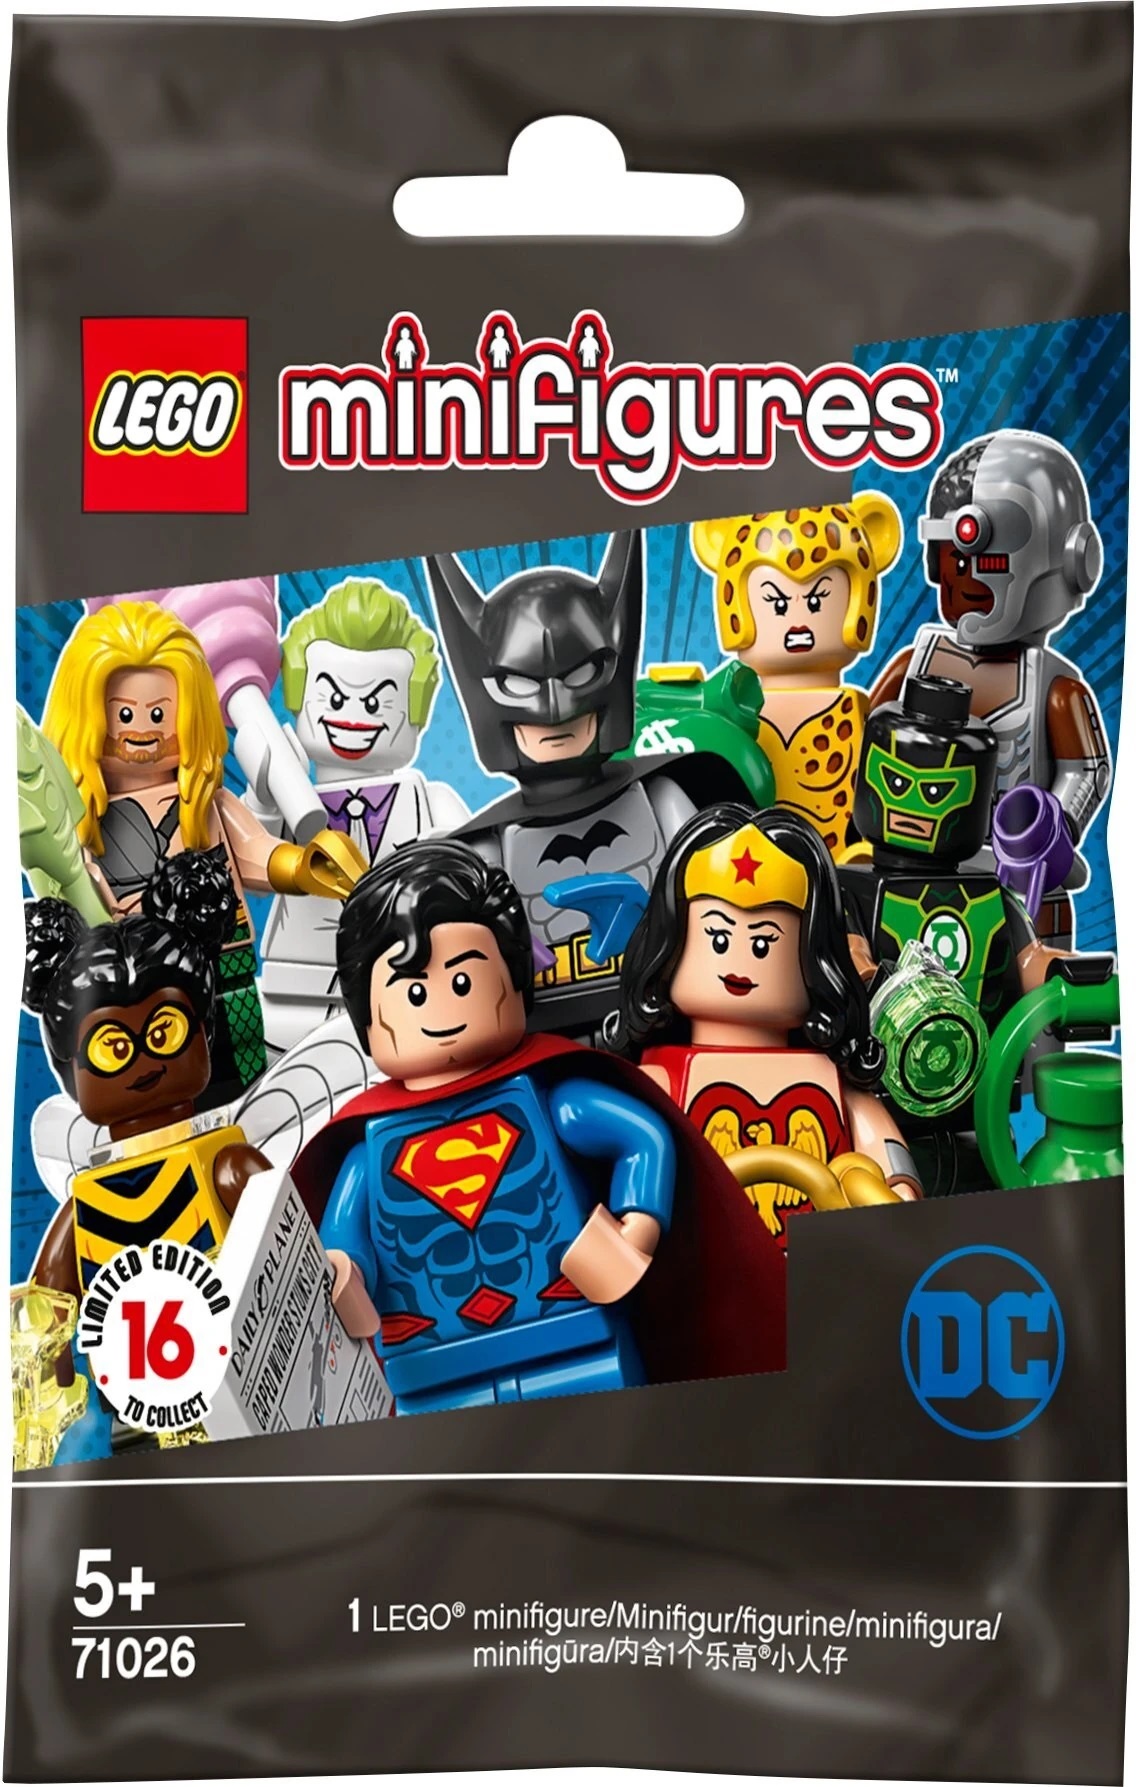 The Cheetah DC Super Heroes LEGO Minifigures N°6 Series Polybag 71026 